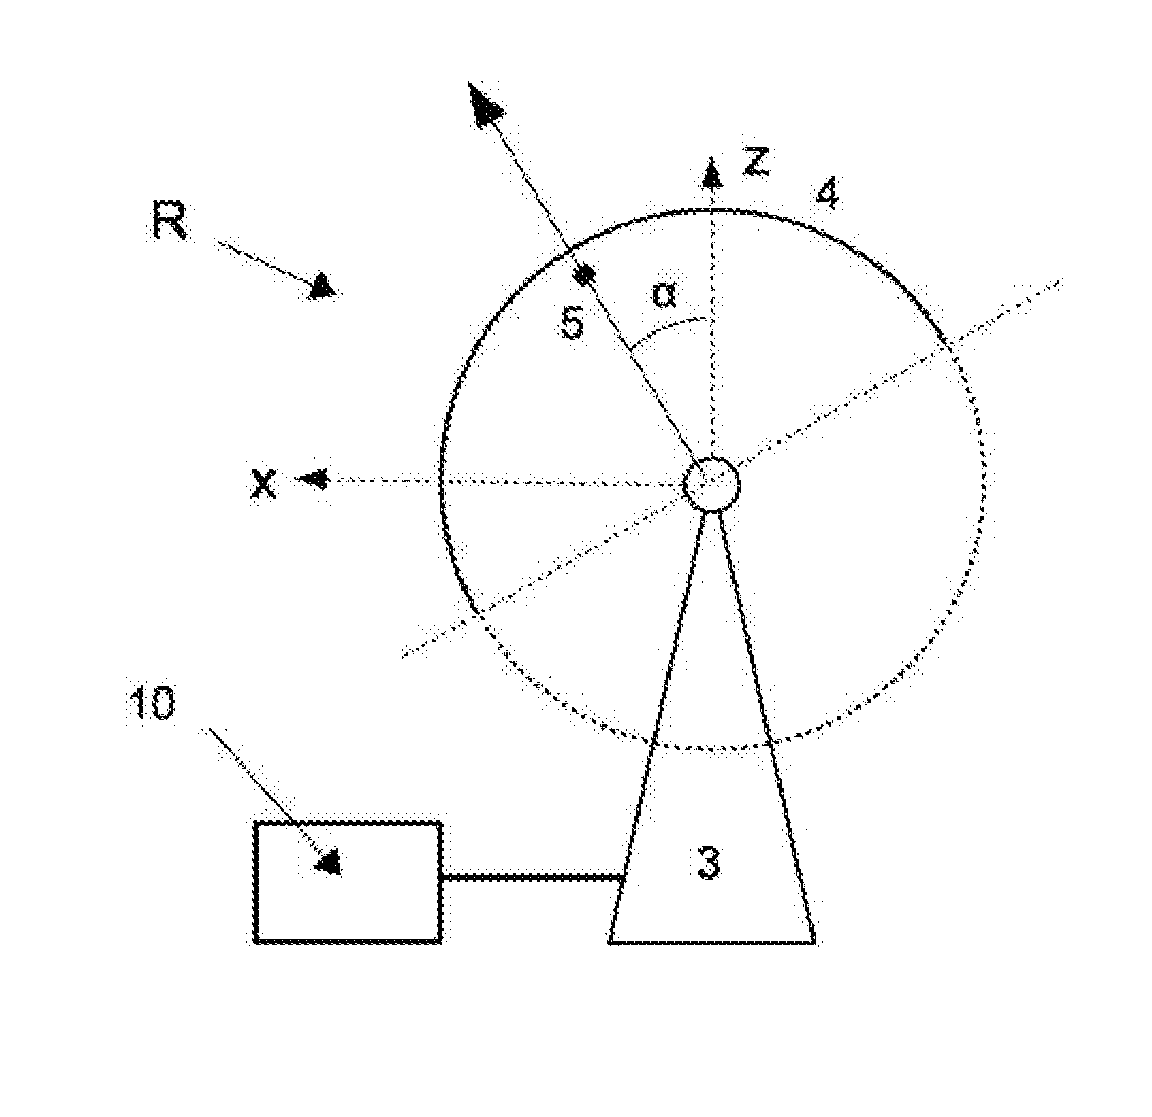 Interferometric radar with rotating antenna